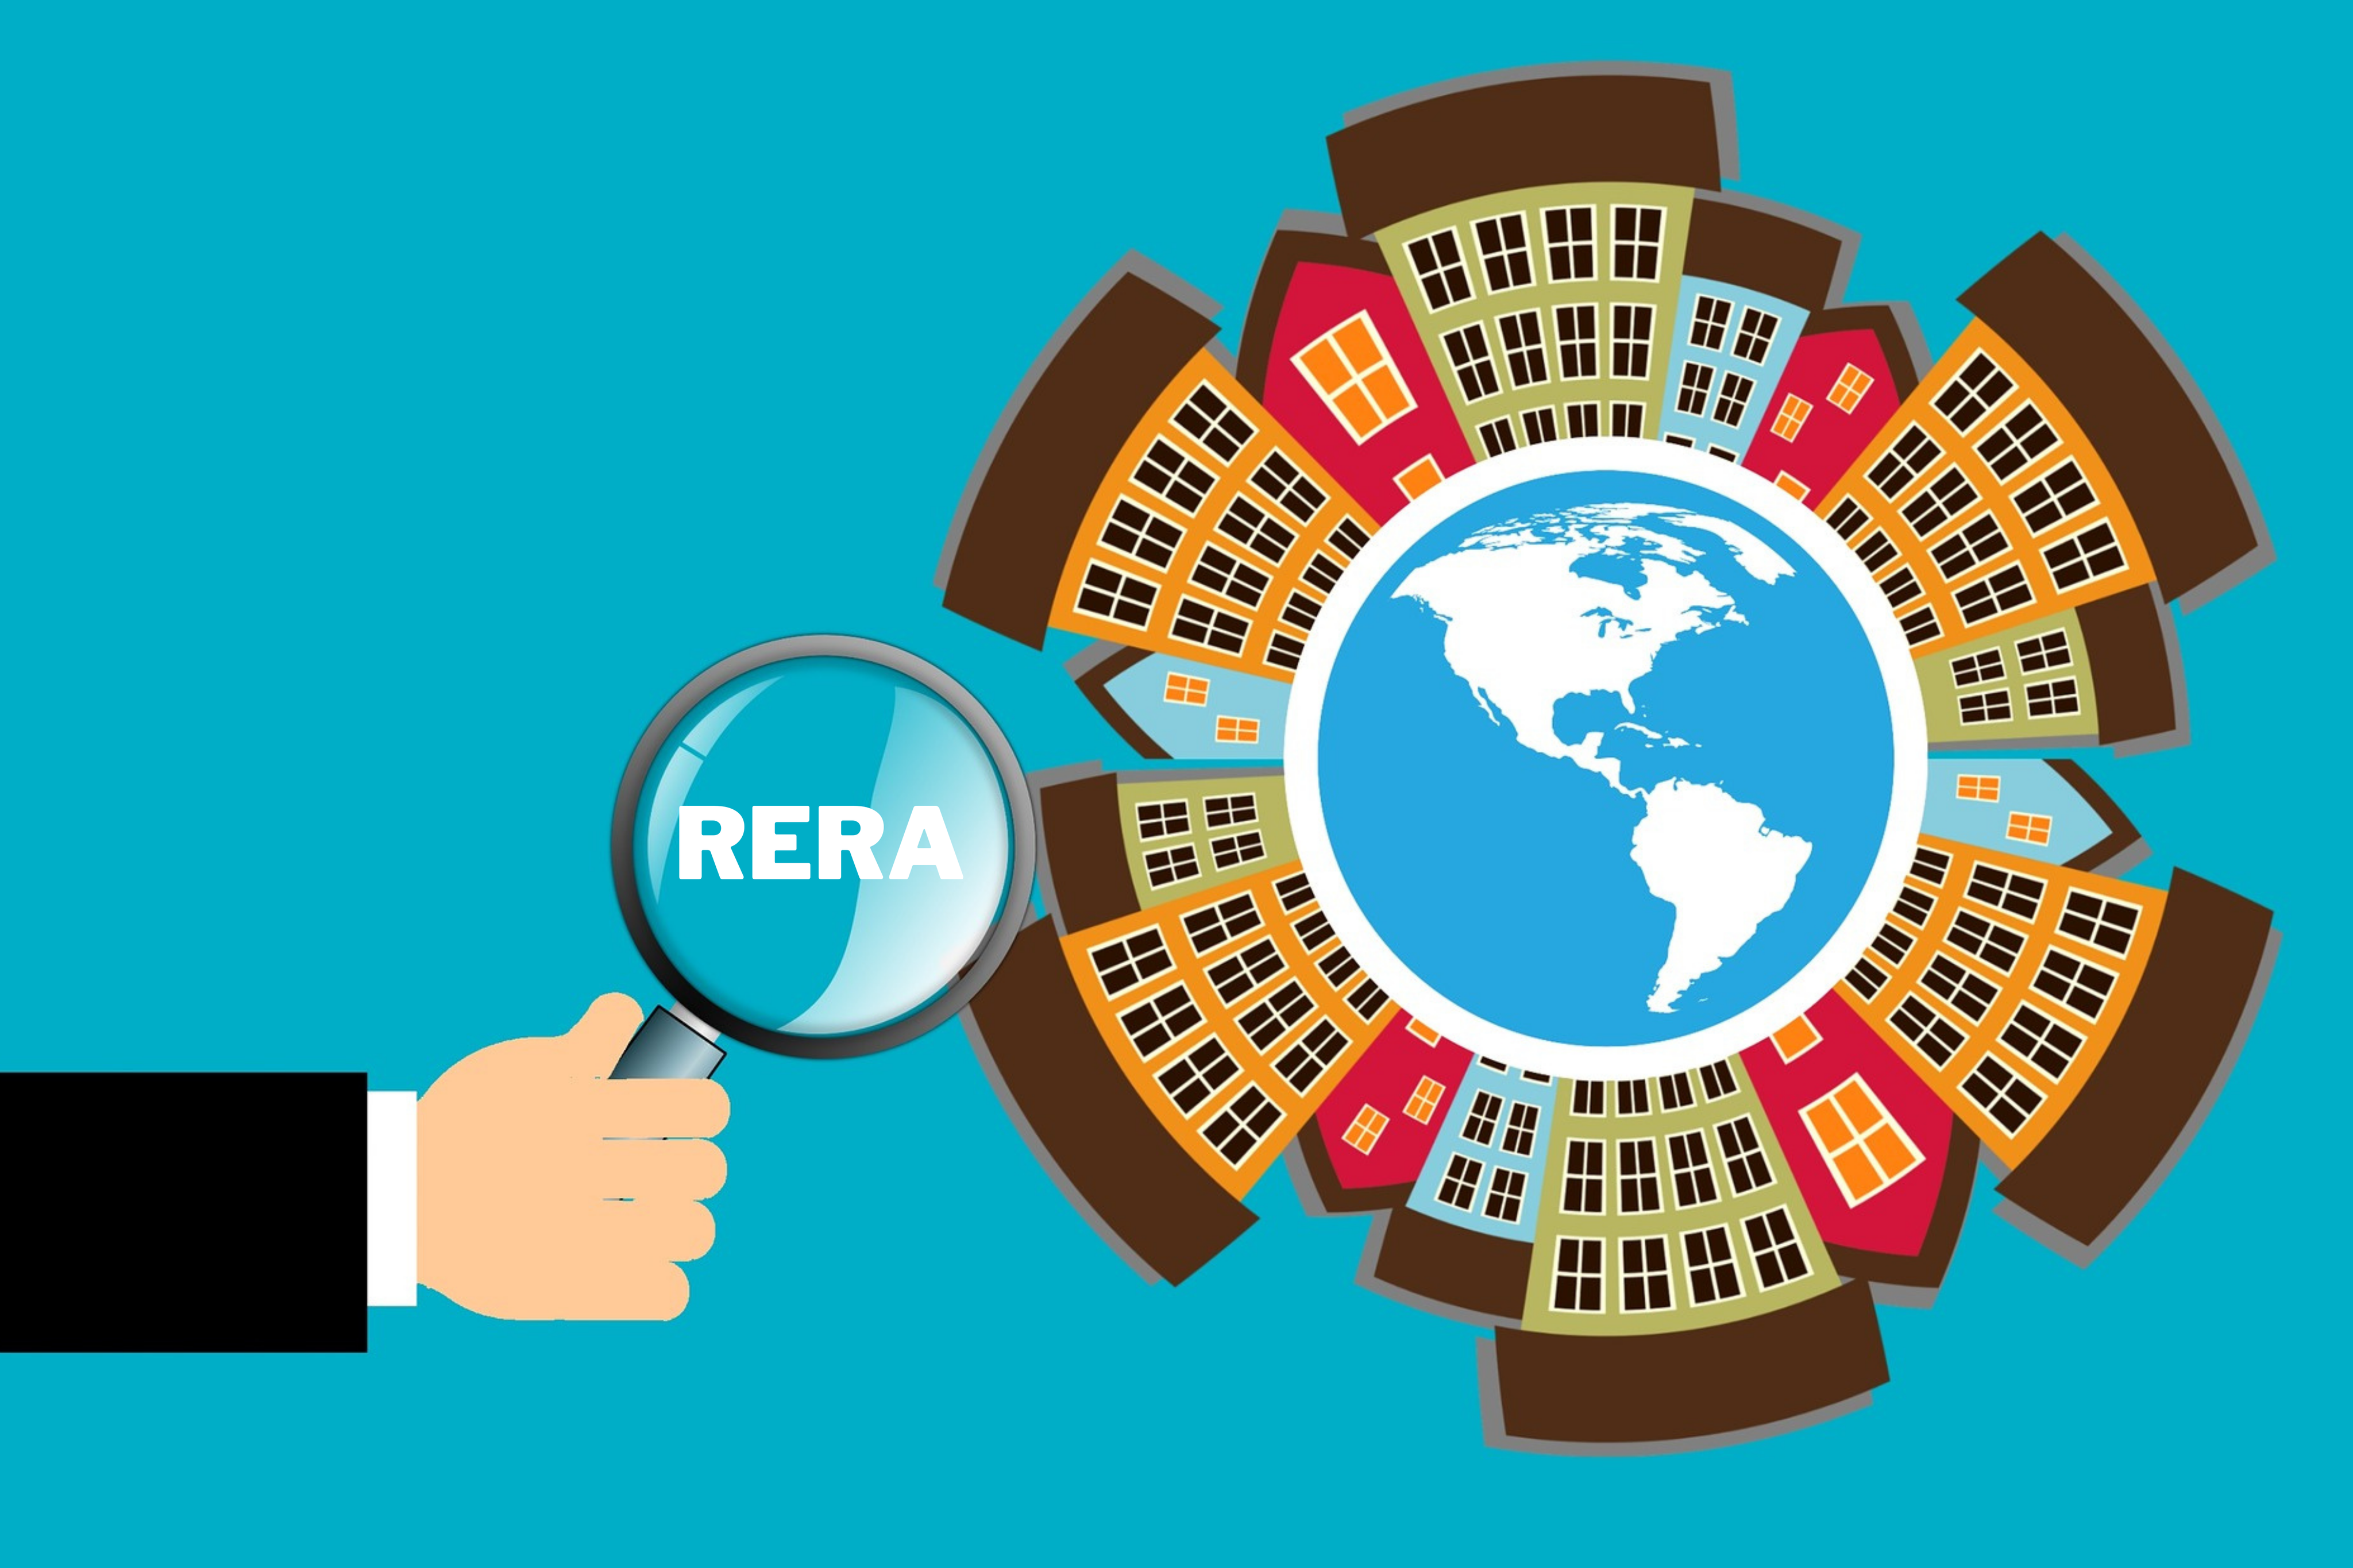 Brief Description About RERA & Its Impact